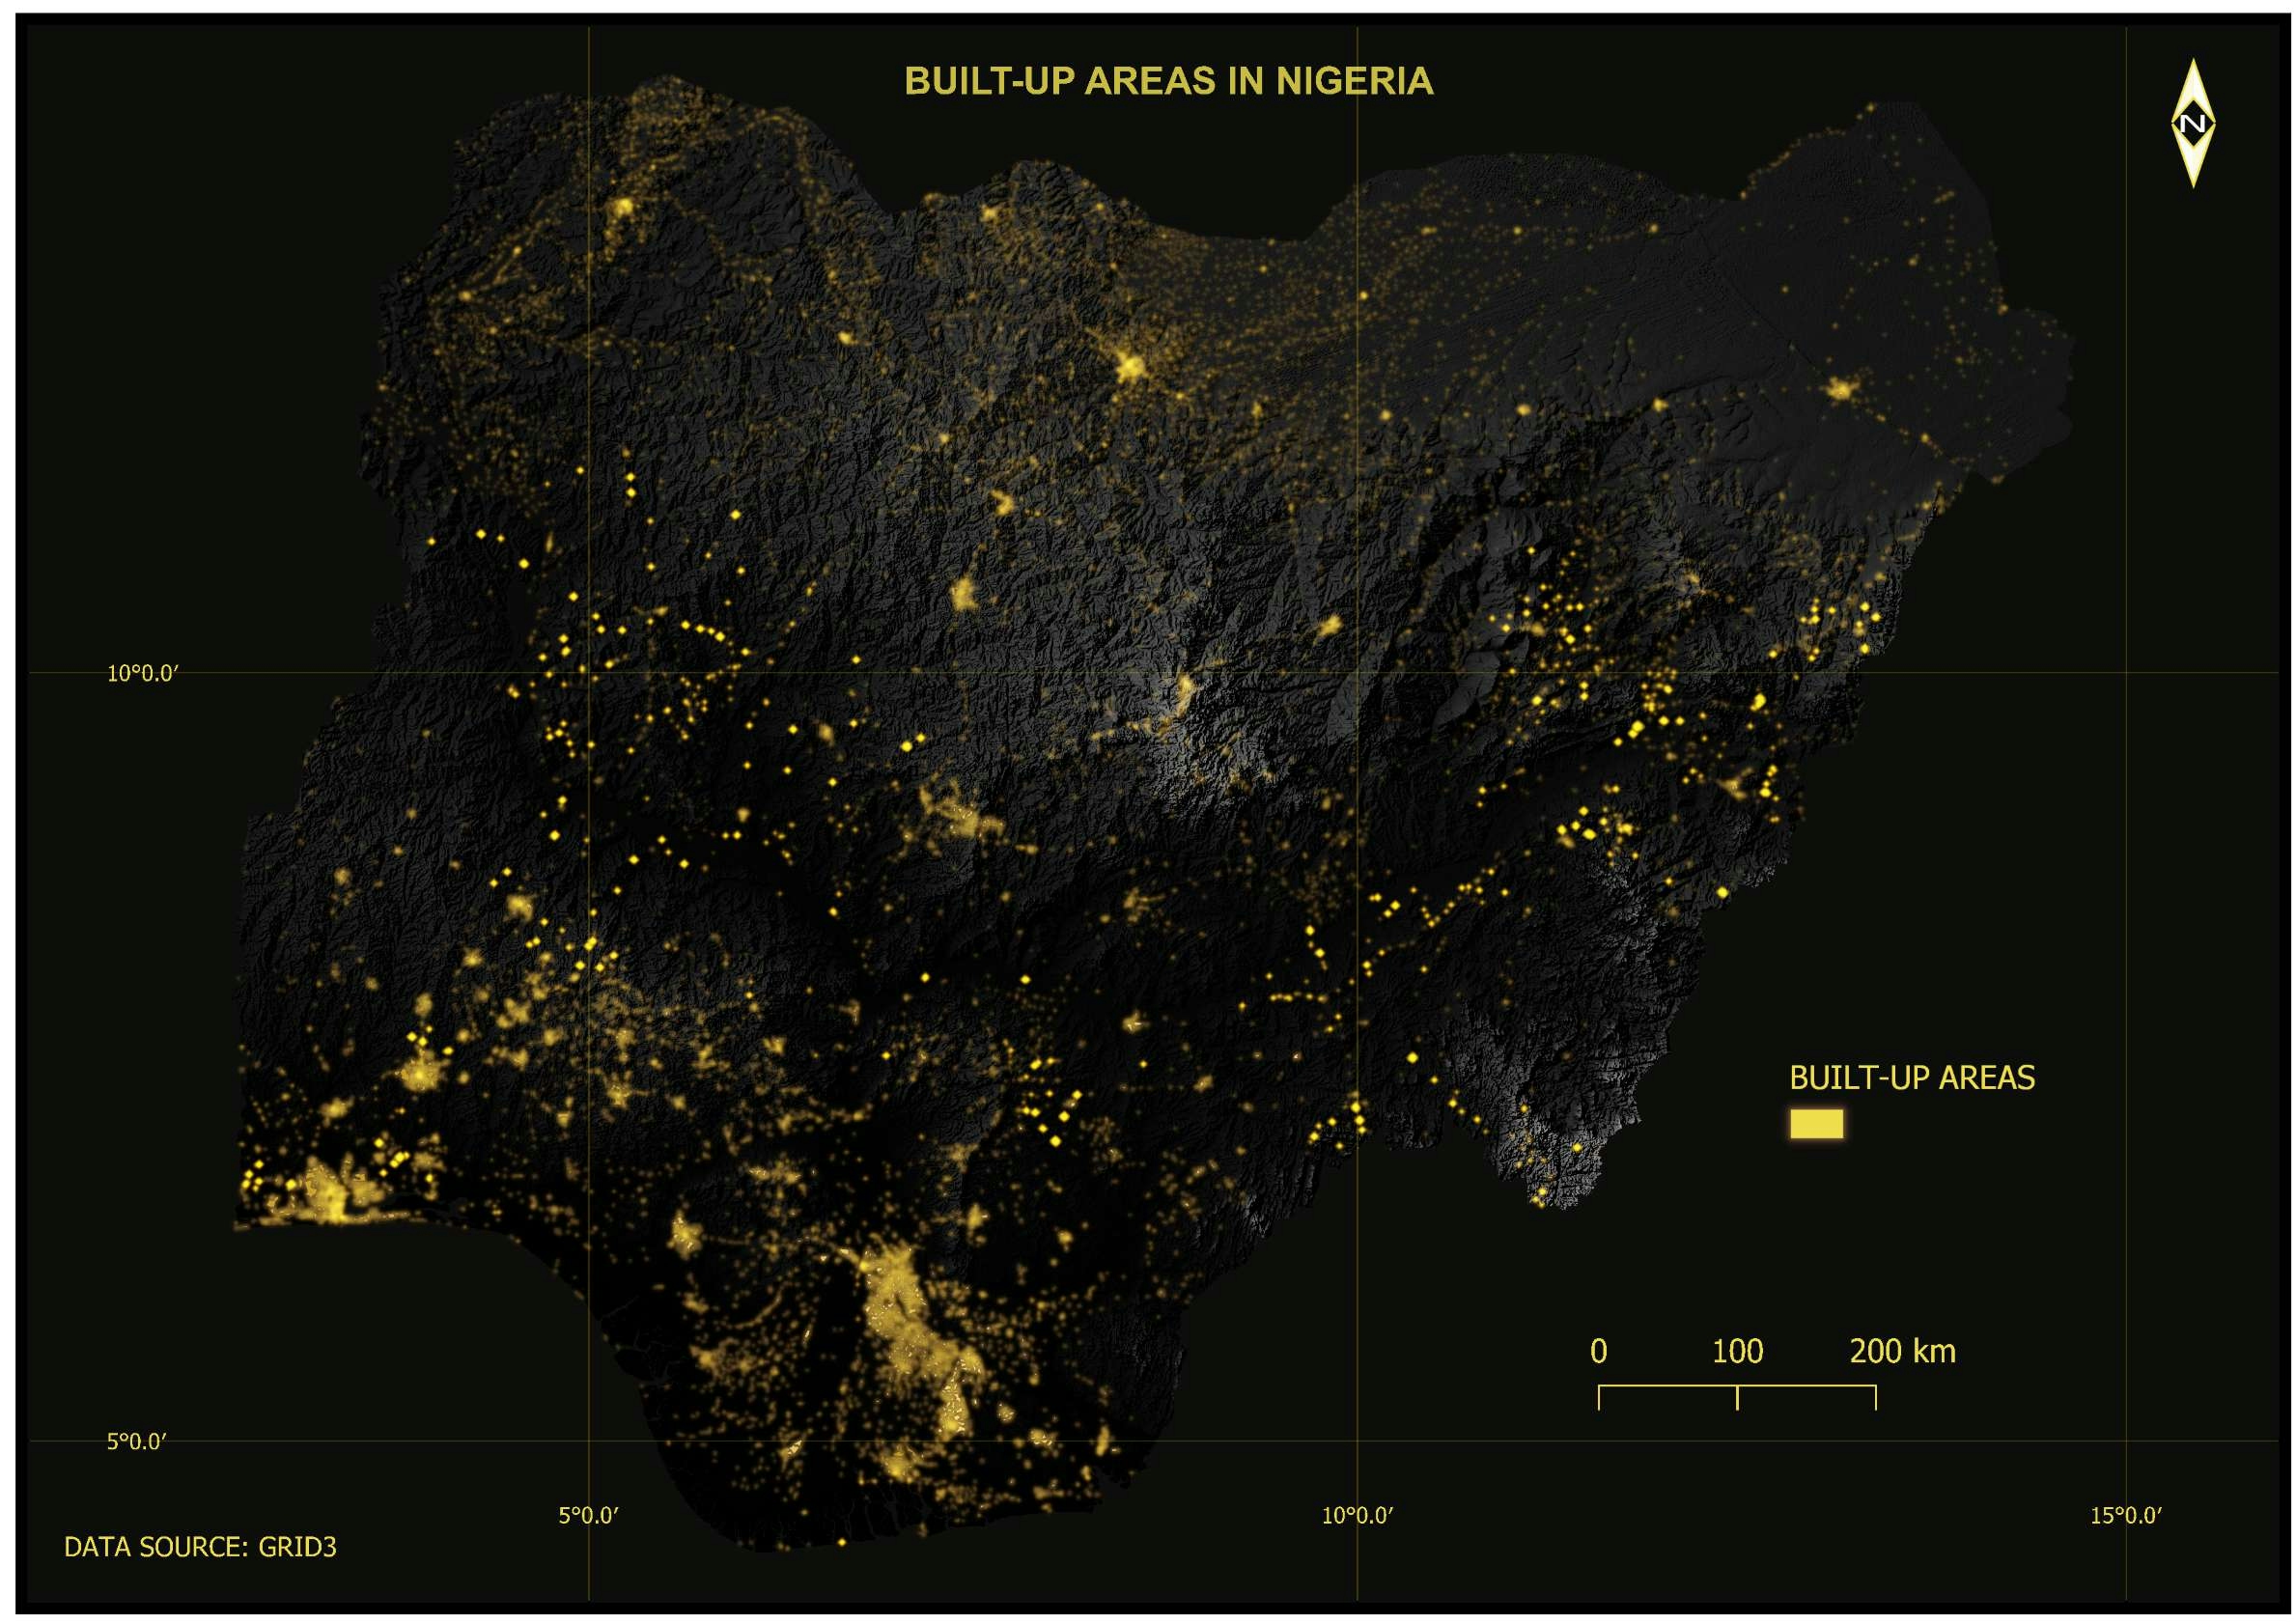 Built-up areas in Nigeria.